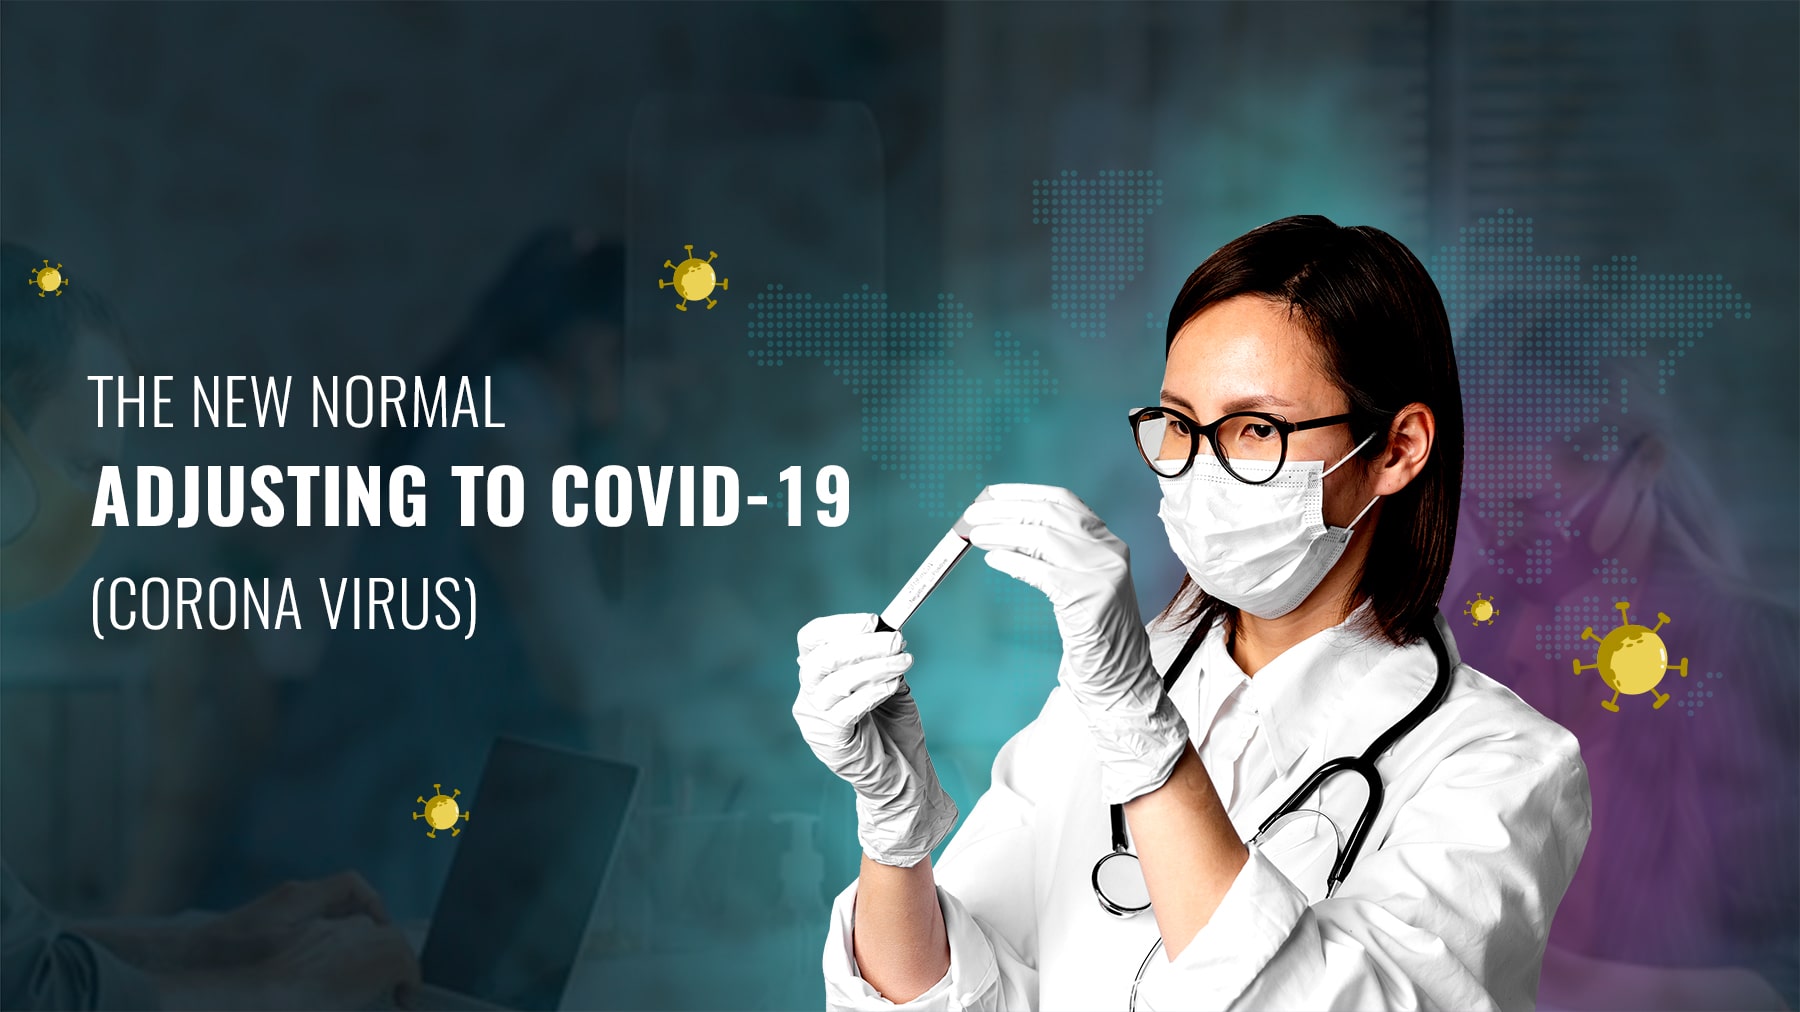 The New Normal: Adjusting to Covid-19 (Coronavirus)